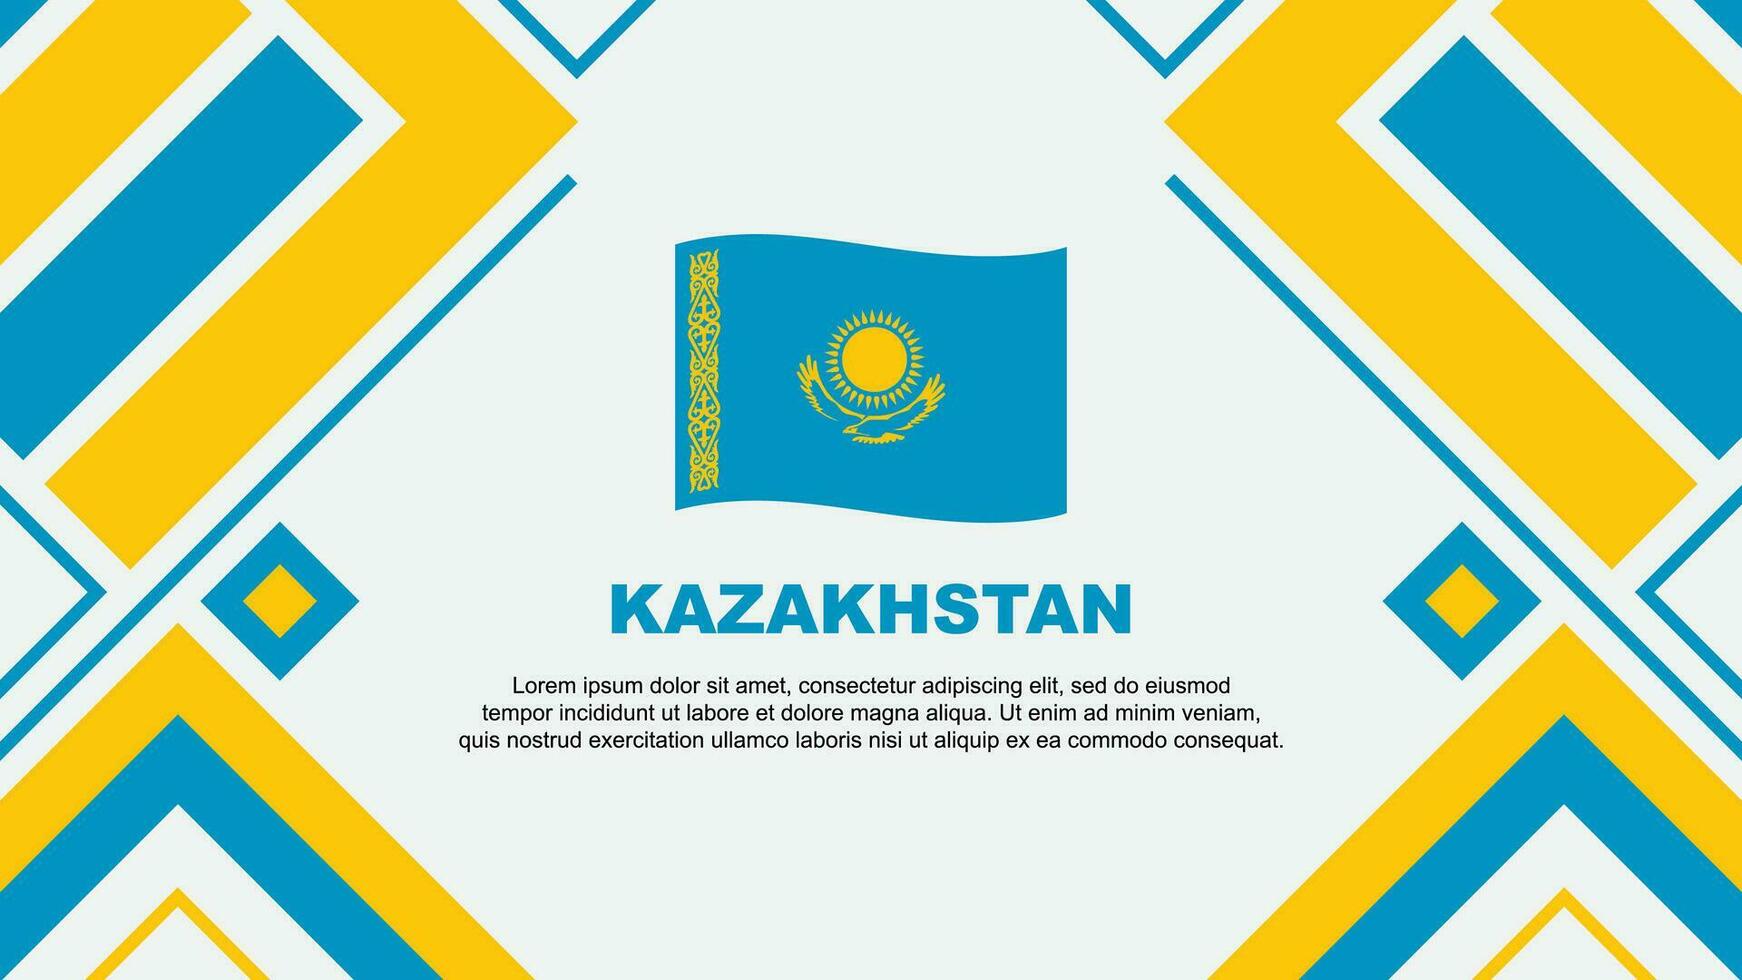 Kazakhstan Flag Abstract Background Design Template. Kazakhstan Independence Day Banner Wallpaper Vector Illustration. Kazakhstan Flag